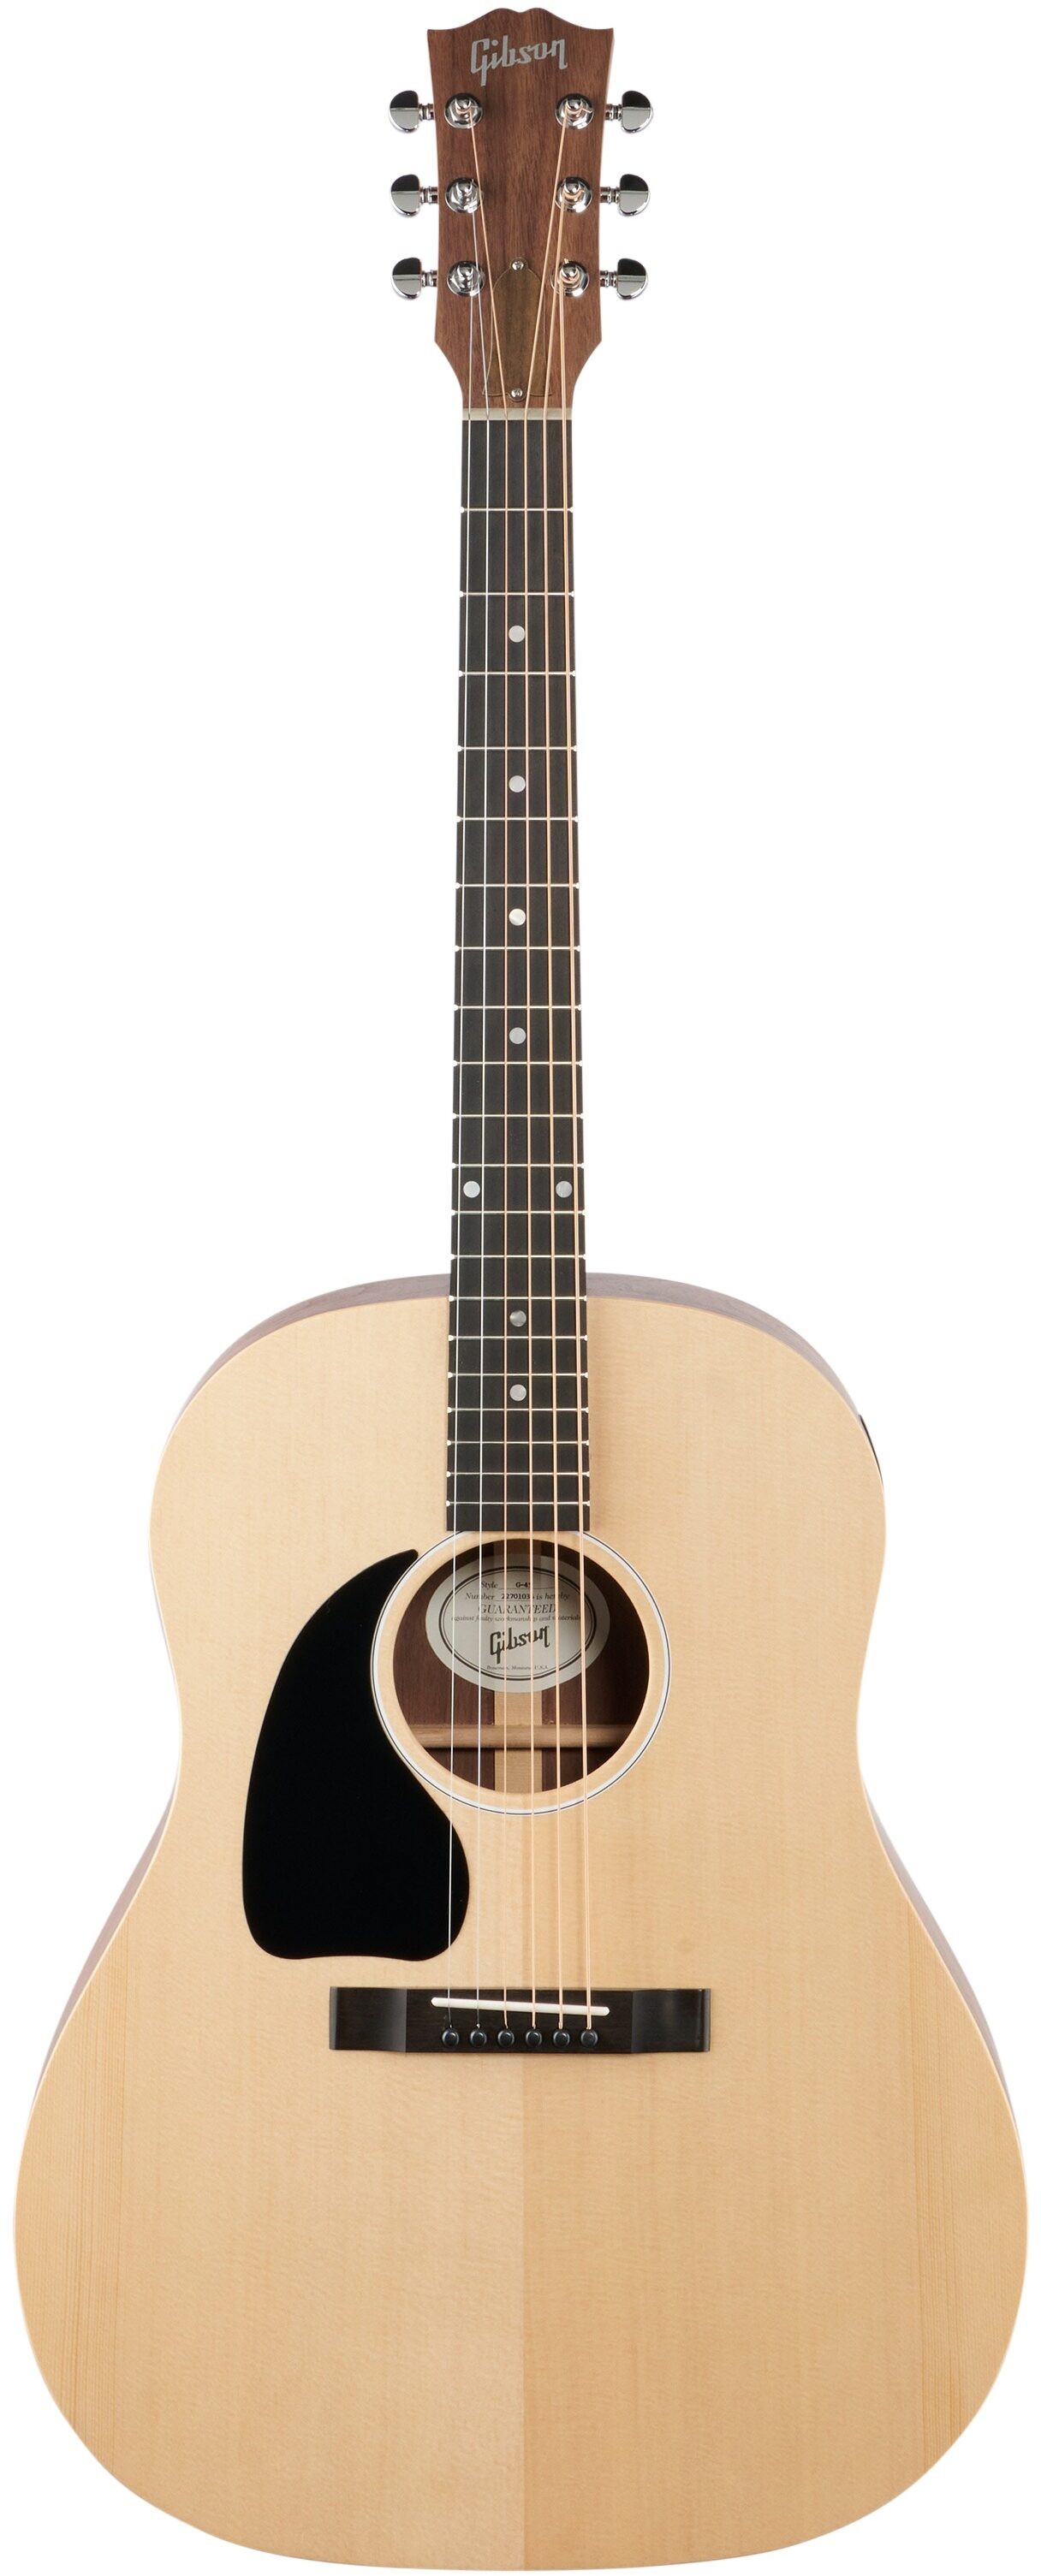 Betrokken Banzai Incarijk Gibson Generation Series G-45 Acoustic Guitar, Left-Handed